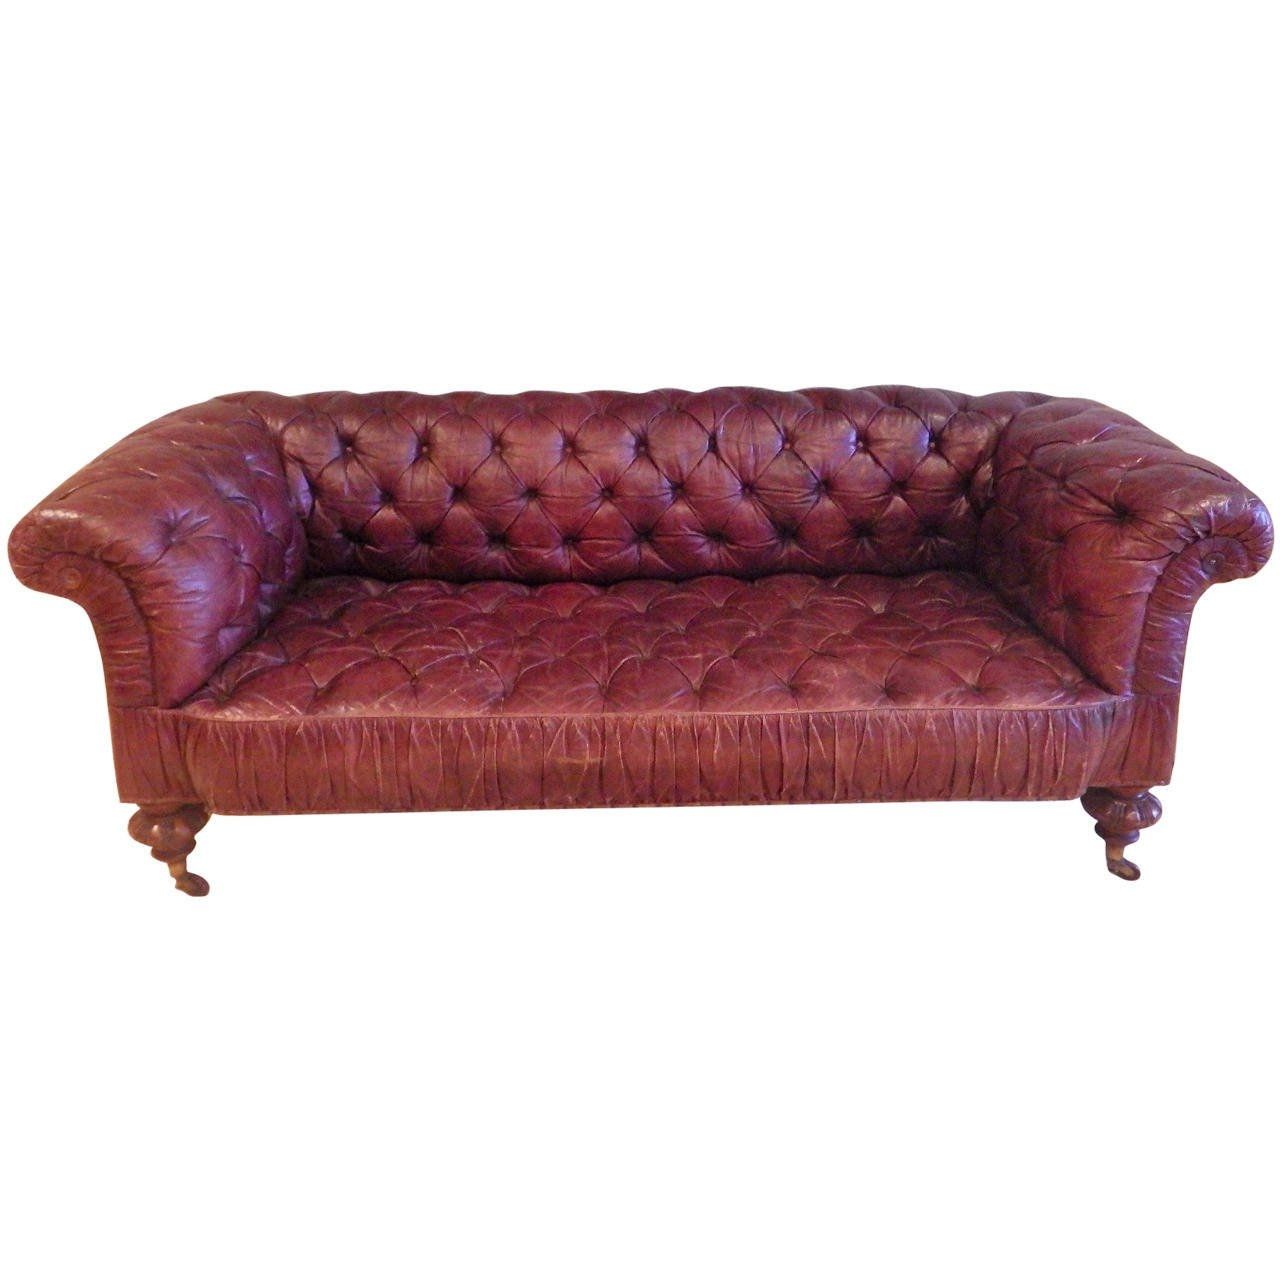 Superb Victorian Leather Sofa Circa 1870 For Sale At 1stdibs In Victorian Leather Sofas (View 1 of 15)